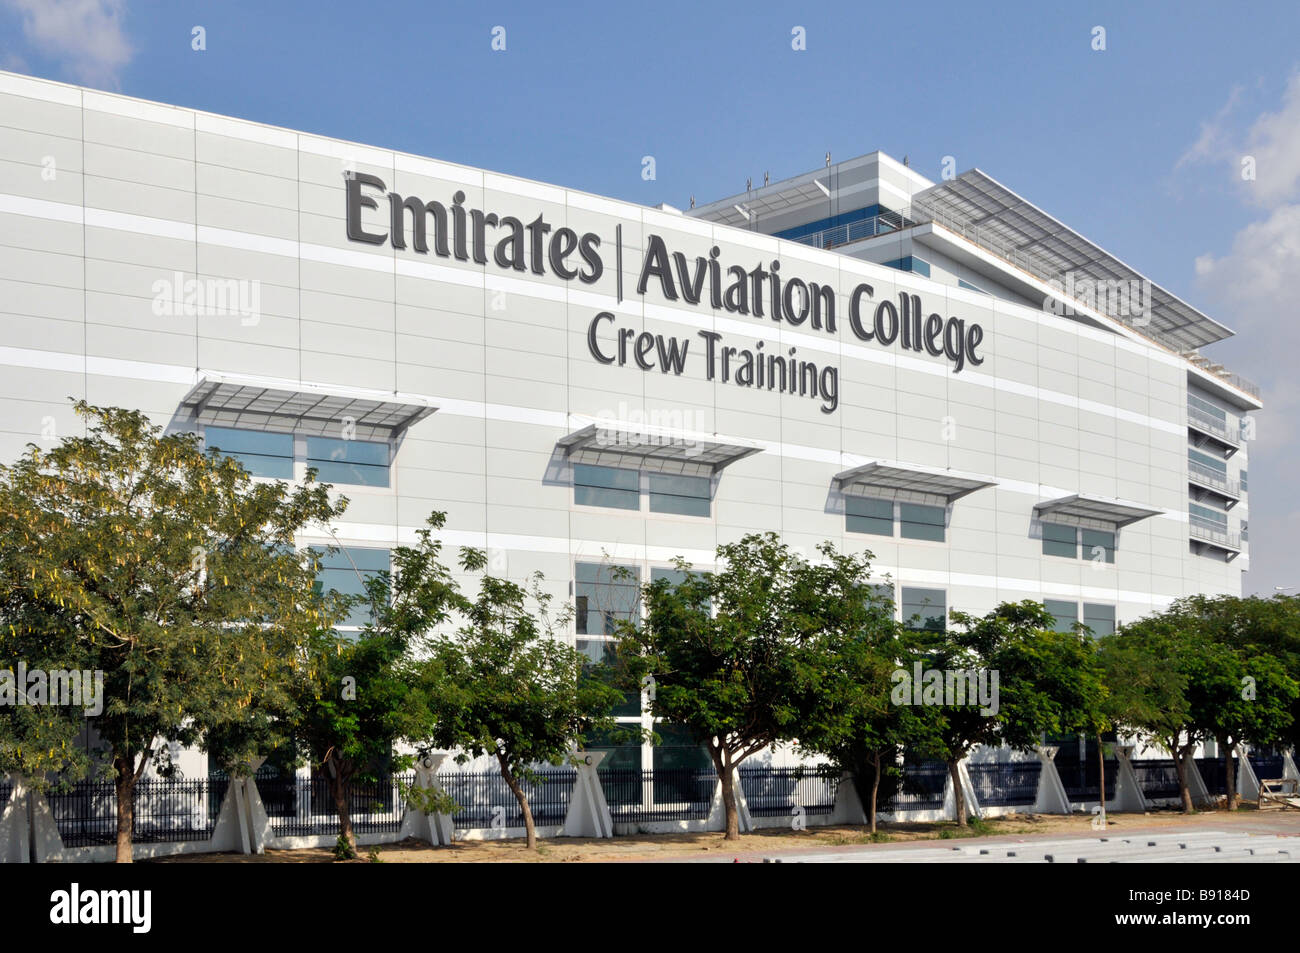 Dubai Emirates aviation college modern building for civil aviation airline air crew staff education & training United Arab Emirates UAE Middle East Stock Photo